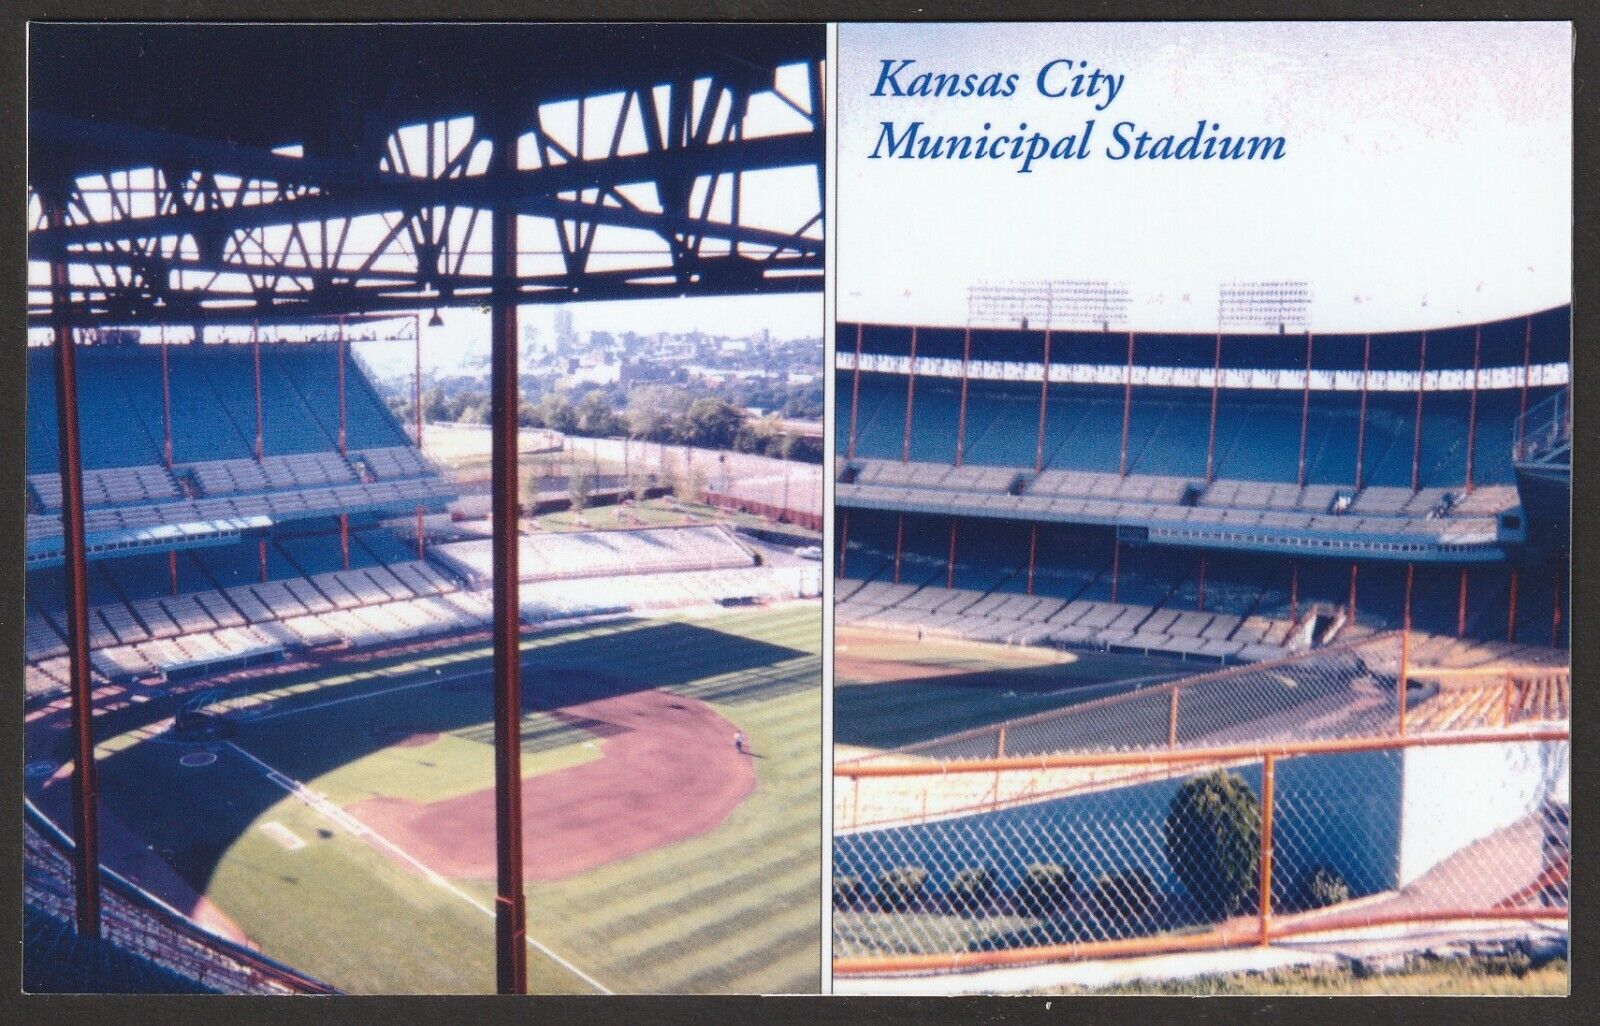 Unique Kansas City Municipal Stadium Postcard - 1961 Photos from 35mm Slides